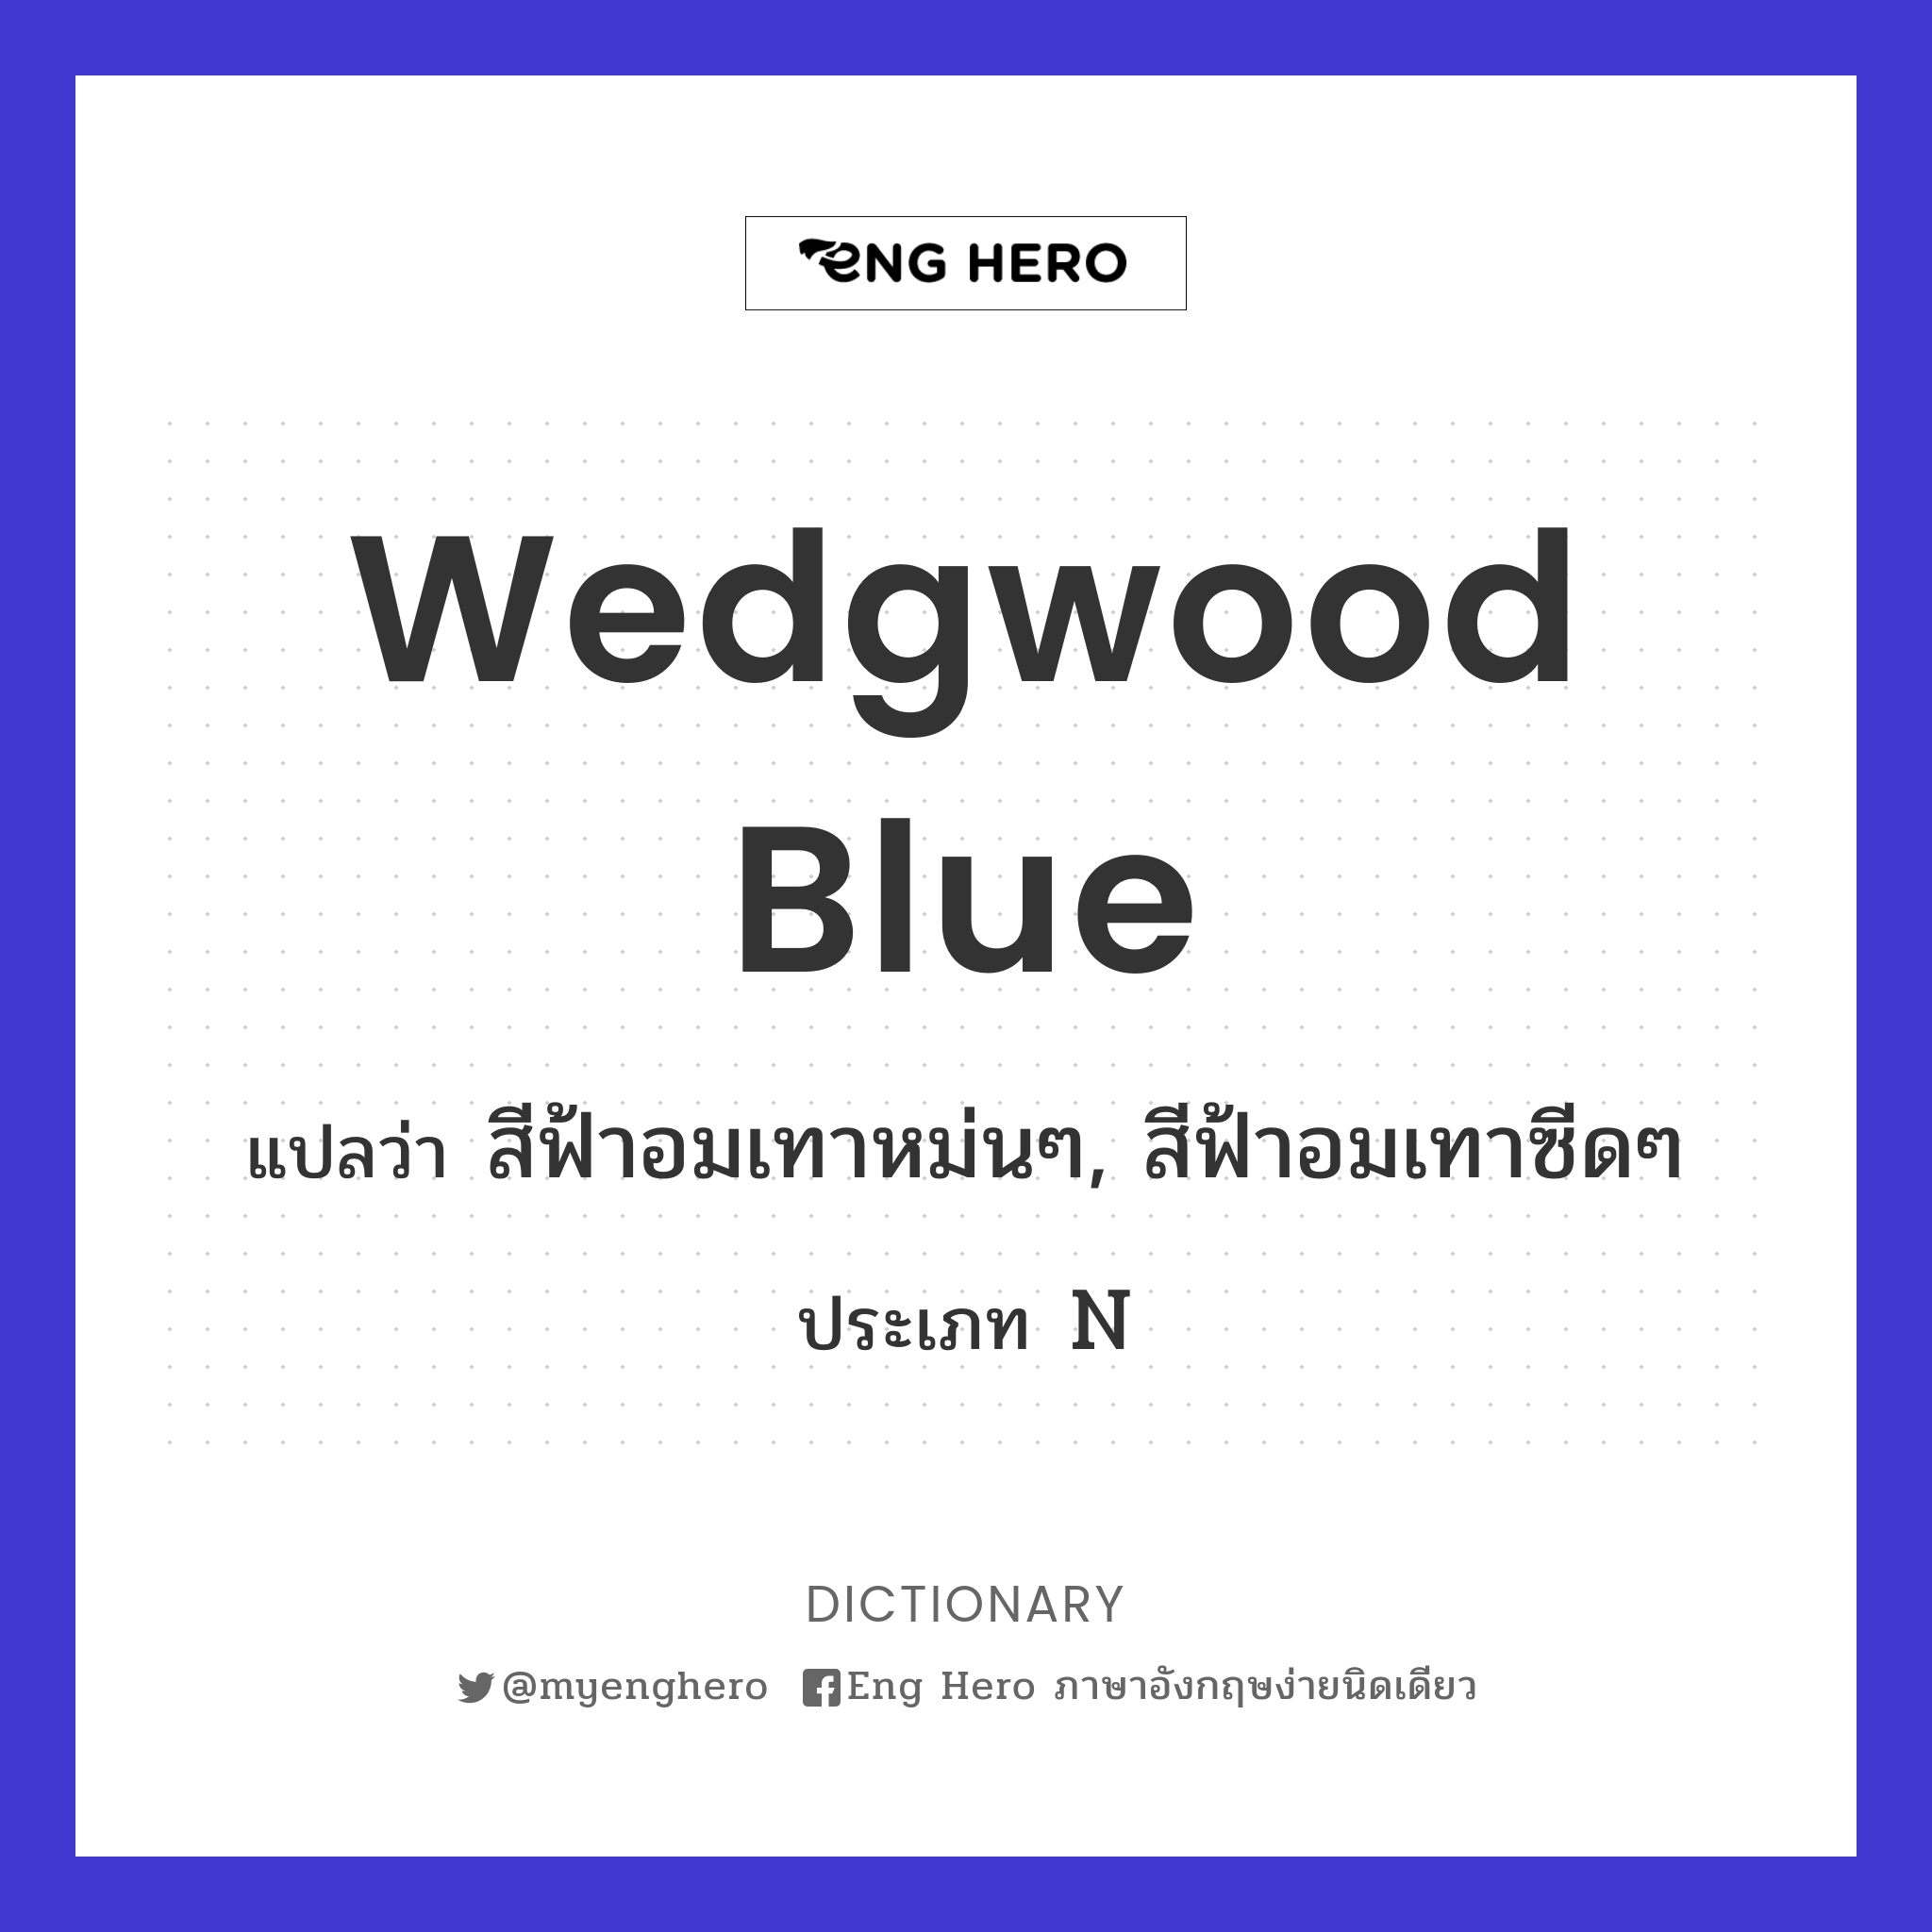 Wedgwood blue